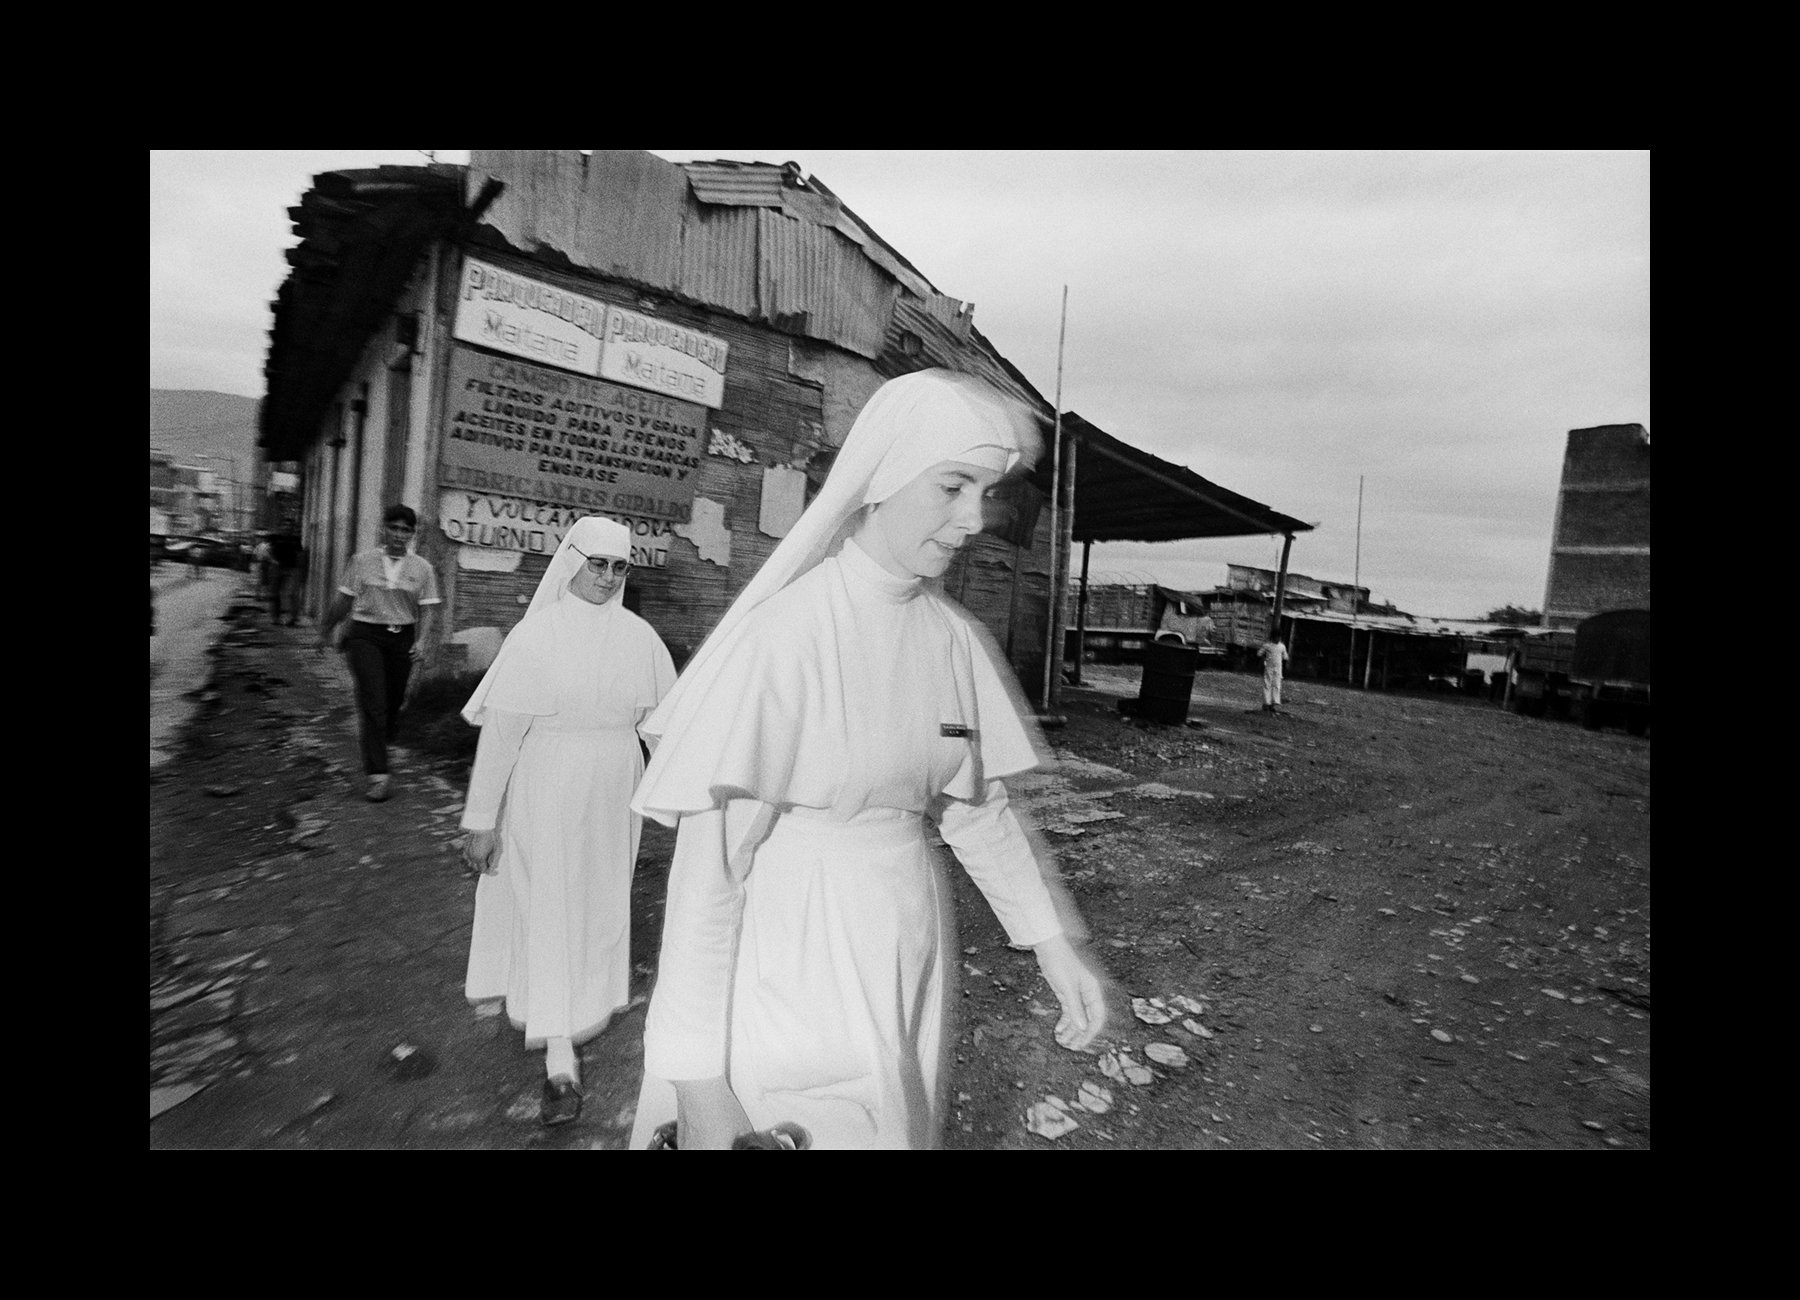    Armenia, Colombia, 1981   Nuns walk through the streets of Armenia.    